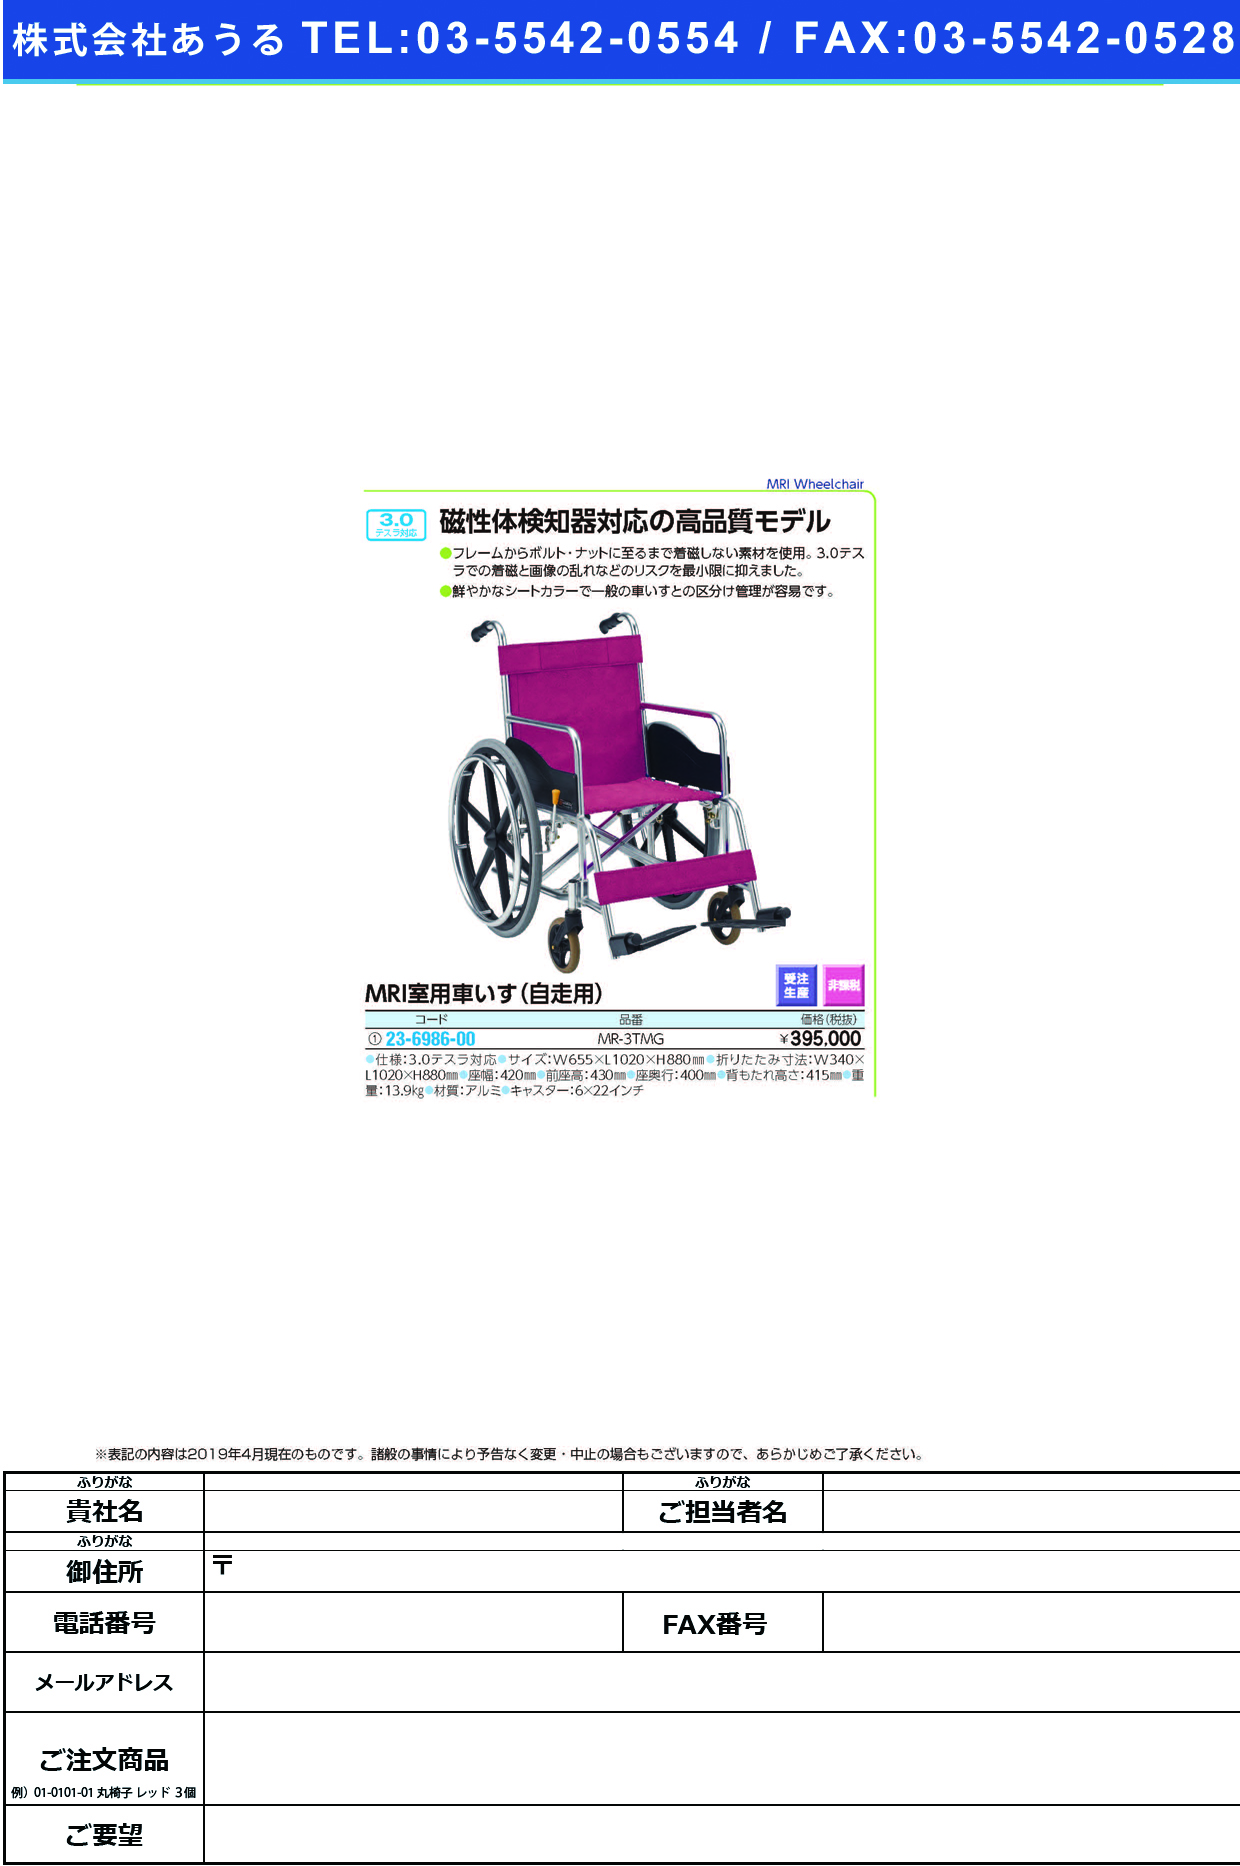 (23-6986-00)ＭＲＩ室用車いす（自走用） MR-3TMG(ﾊｲｽﾍﾟｯｸ) MRIｼﾂﾖｳｸﾙﾏｲｽ(松永製作所)【1台単位】【2019年カタログ商品】